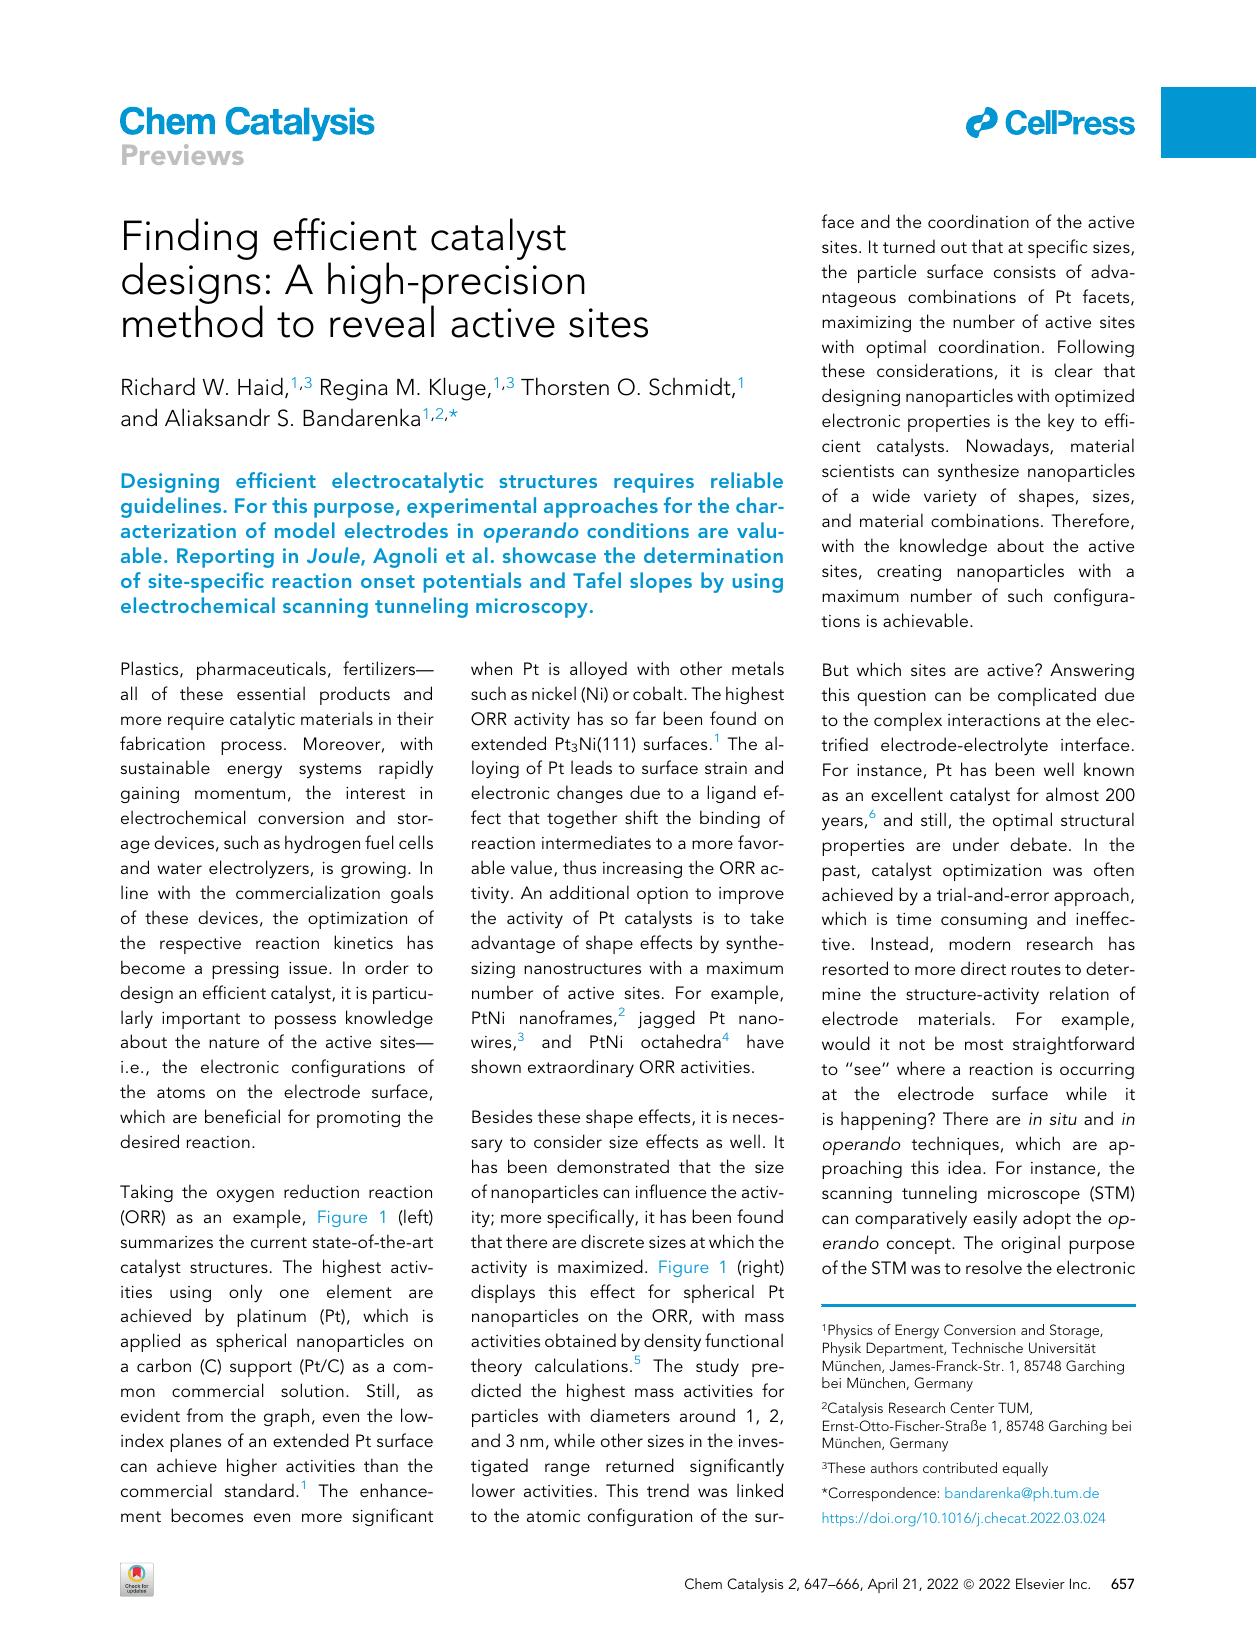 Finding efficient catalyst designs: A high-precision method to reveal active sites by Richard W. Haid & Regina M. Kluge & Thorsten O. Schmidt & Aliaksandr S. Bandarenka